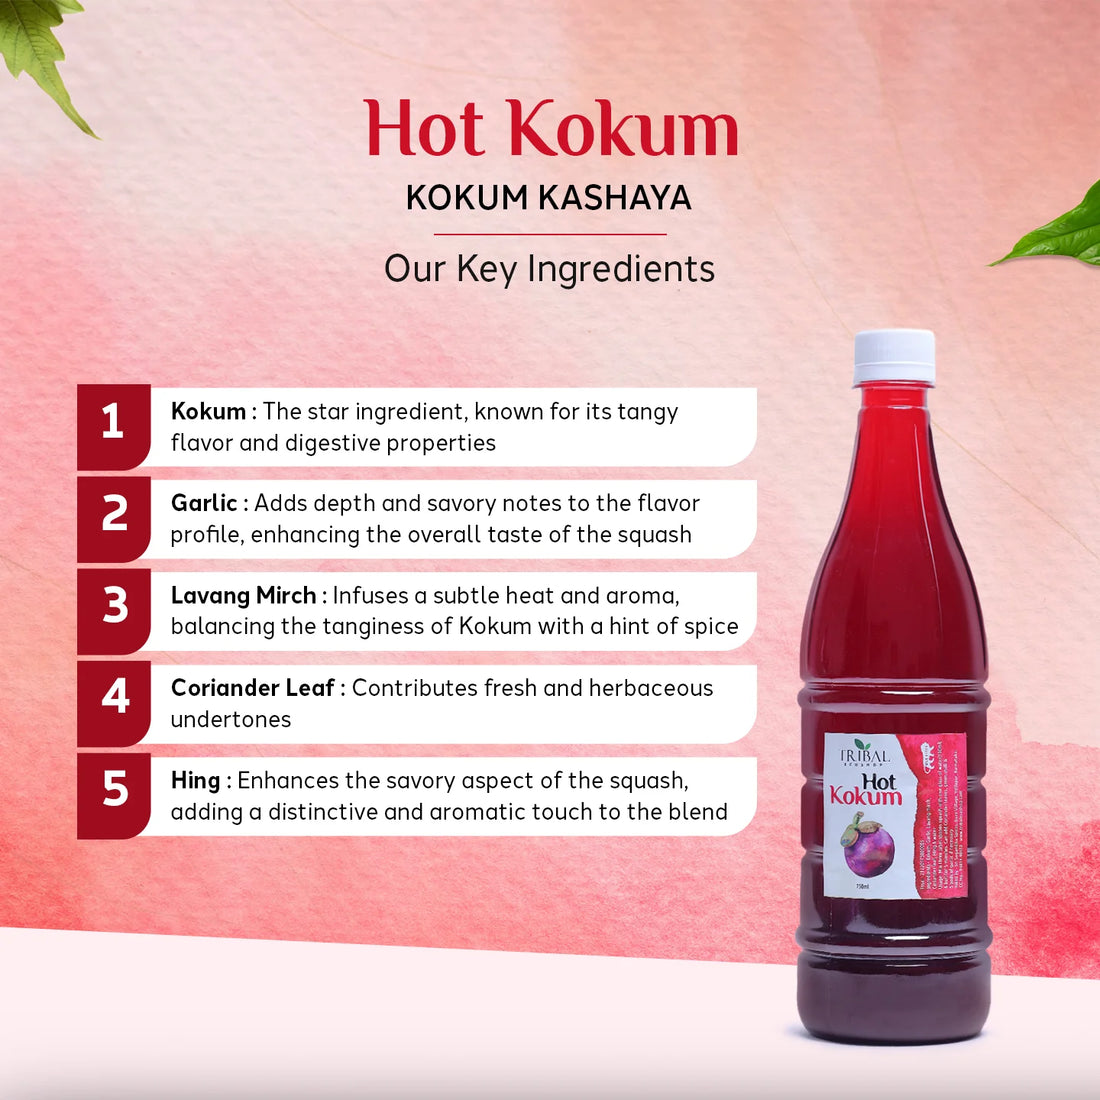 Kokum Kashaya or Hot Kokum